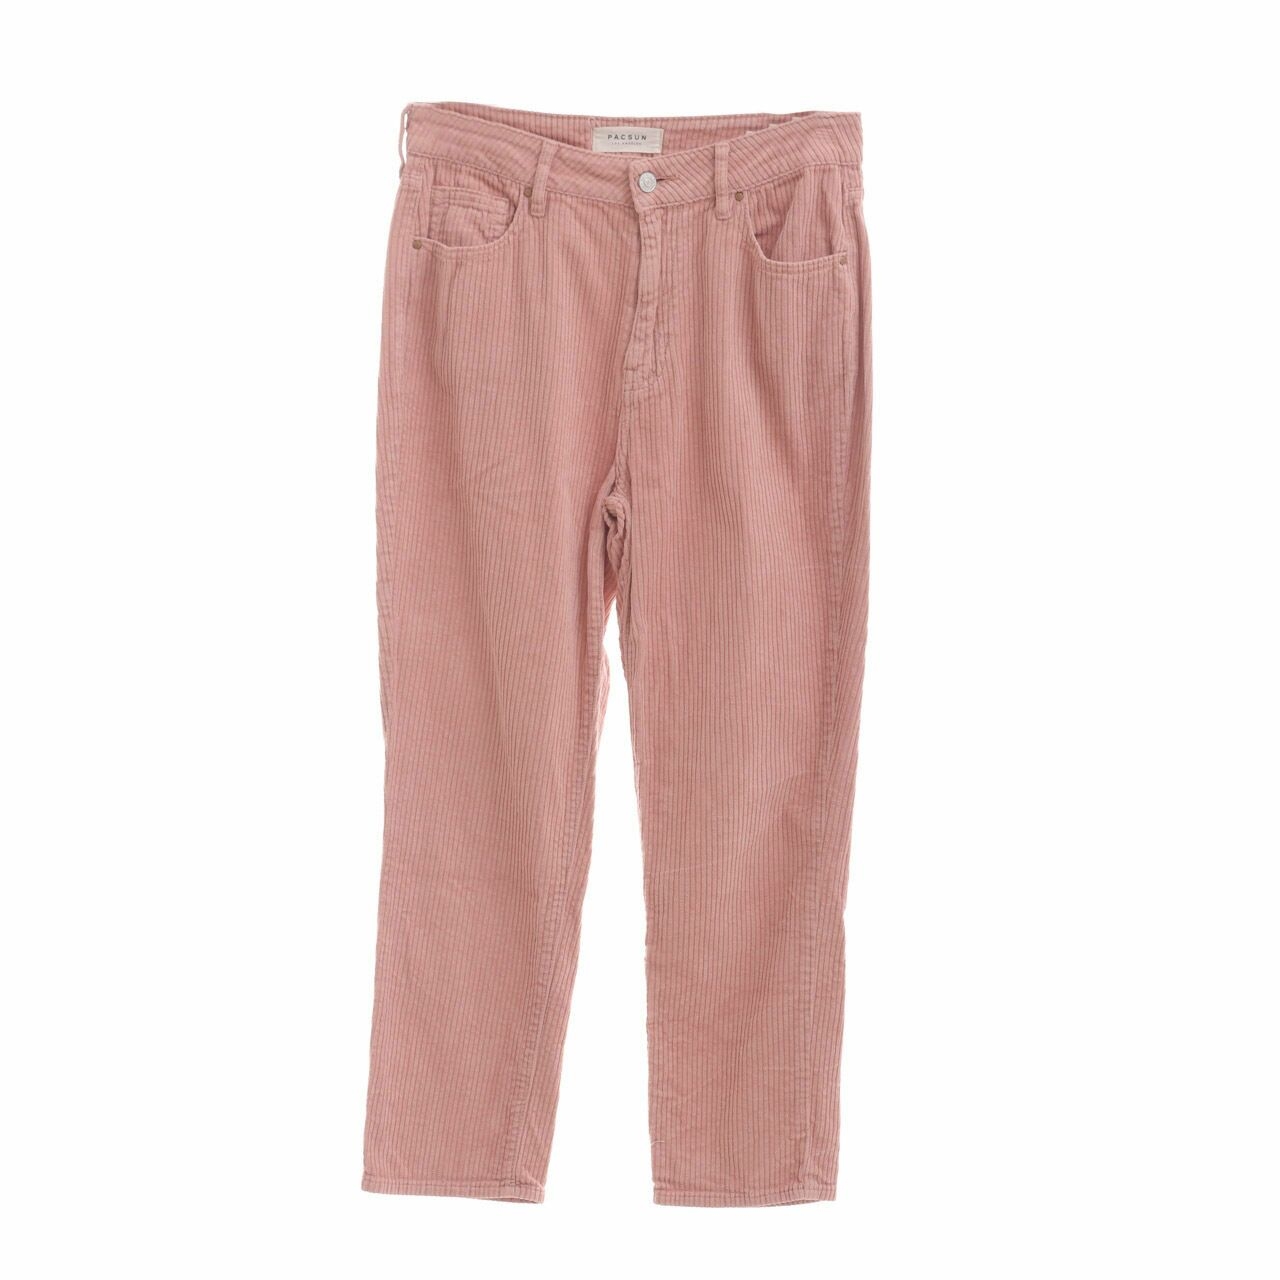 Pacsun Dusty Pink Corduroy Long Pants